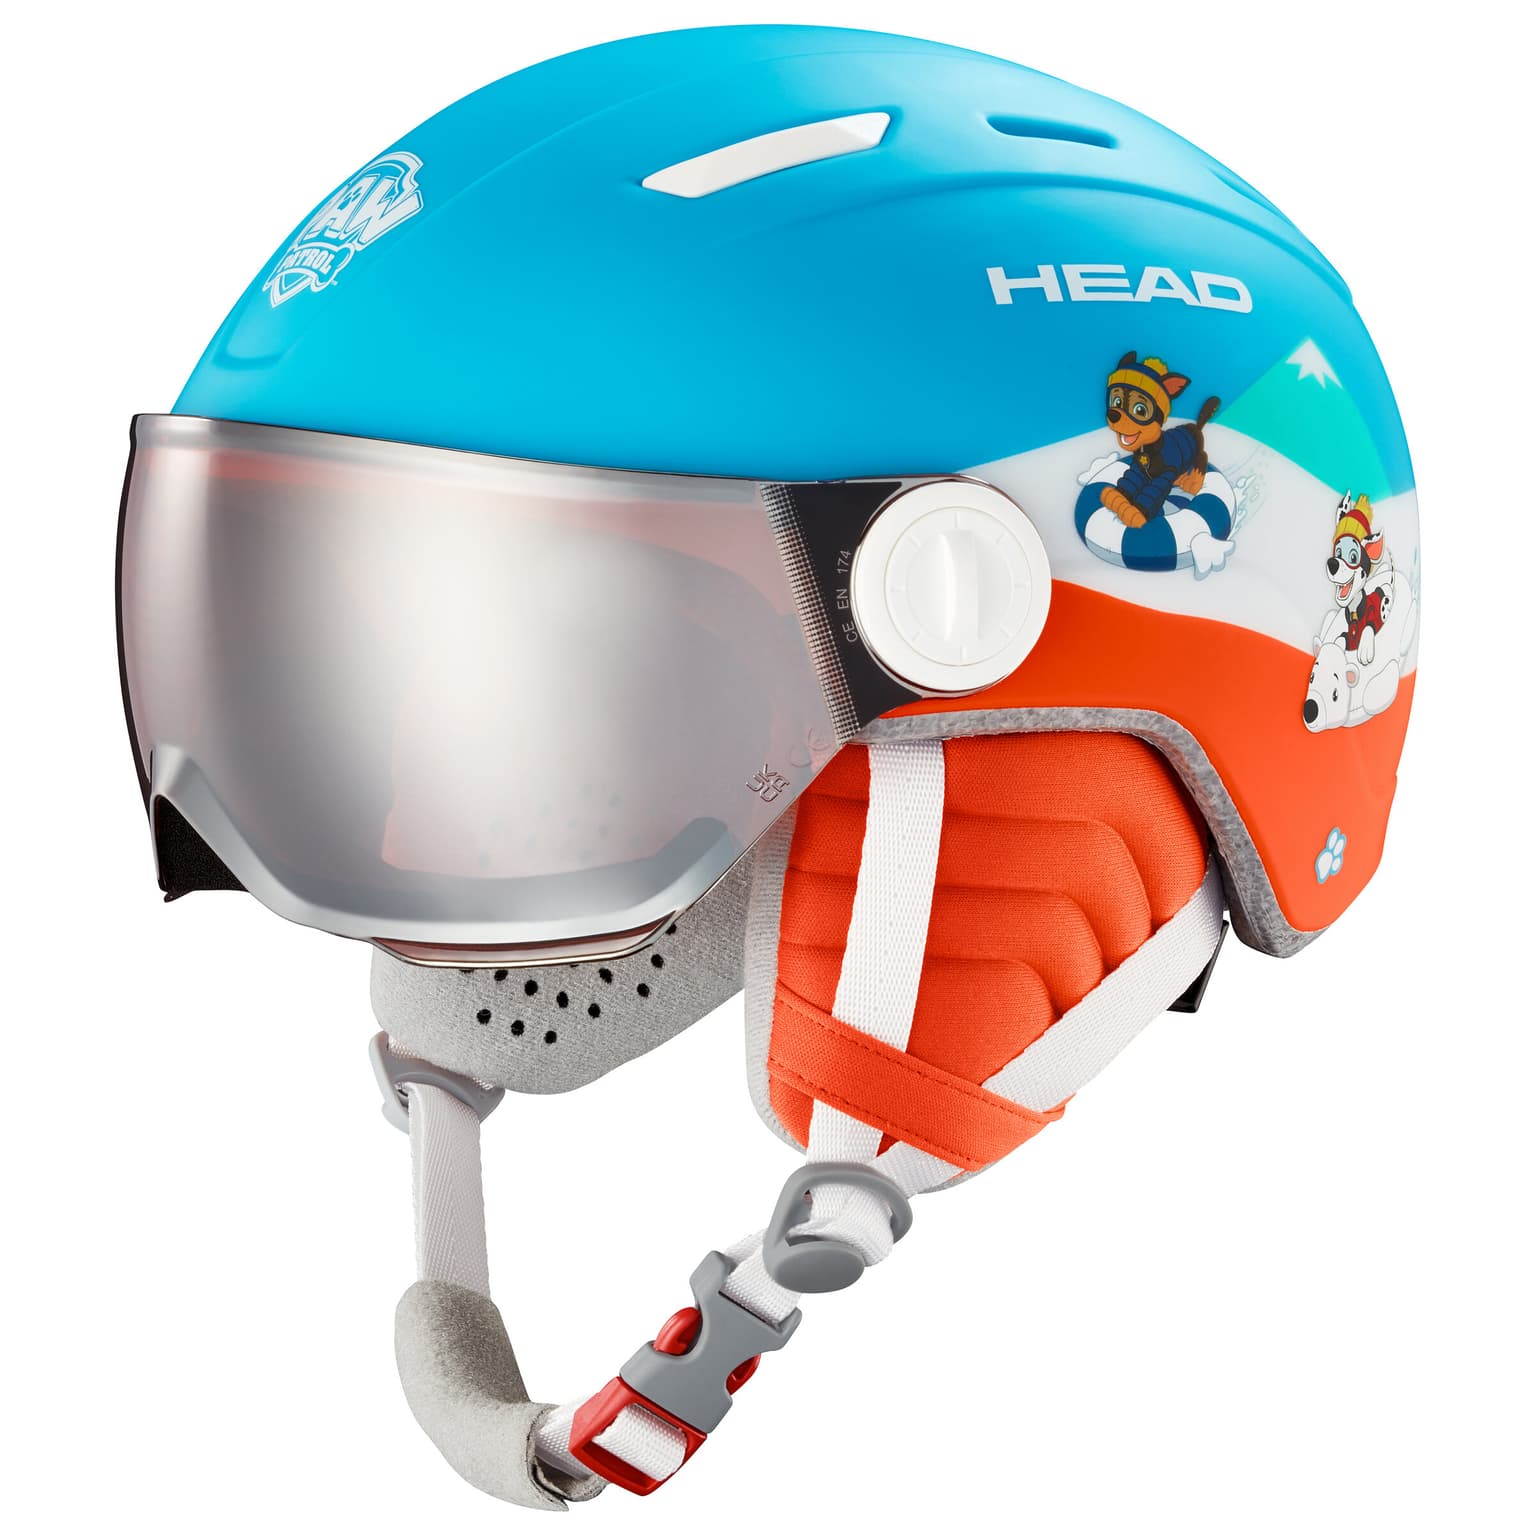 Head Head Kinder-Visorhelm Paw Patrol Casque de ski bleu 1